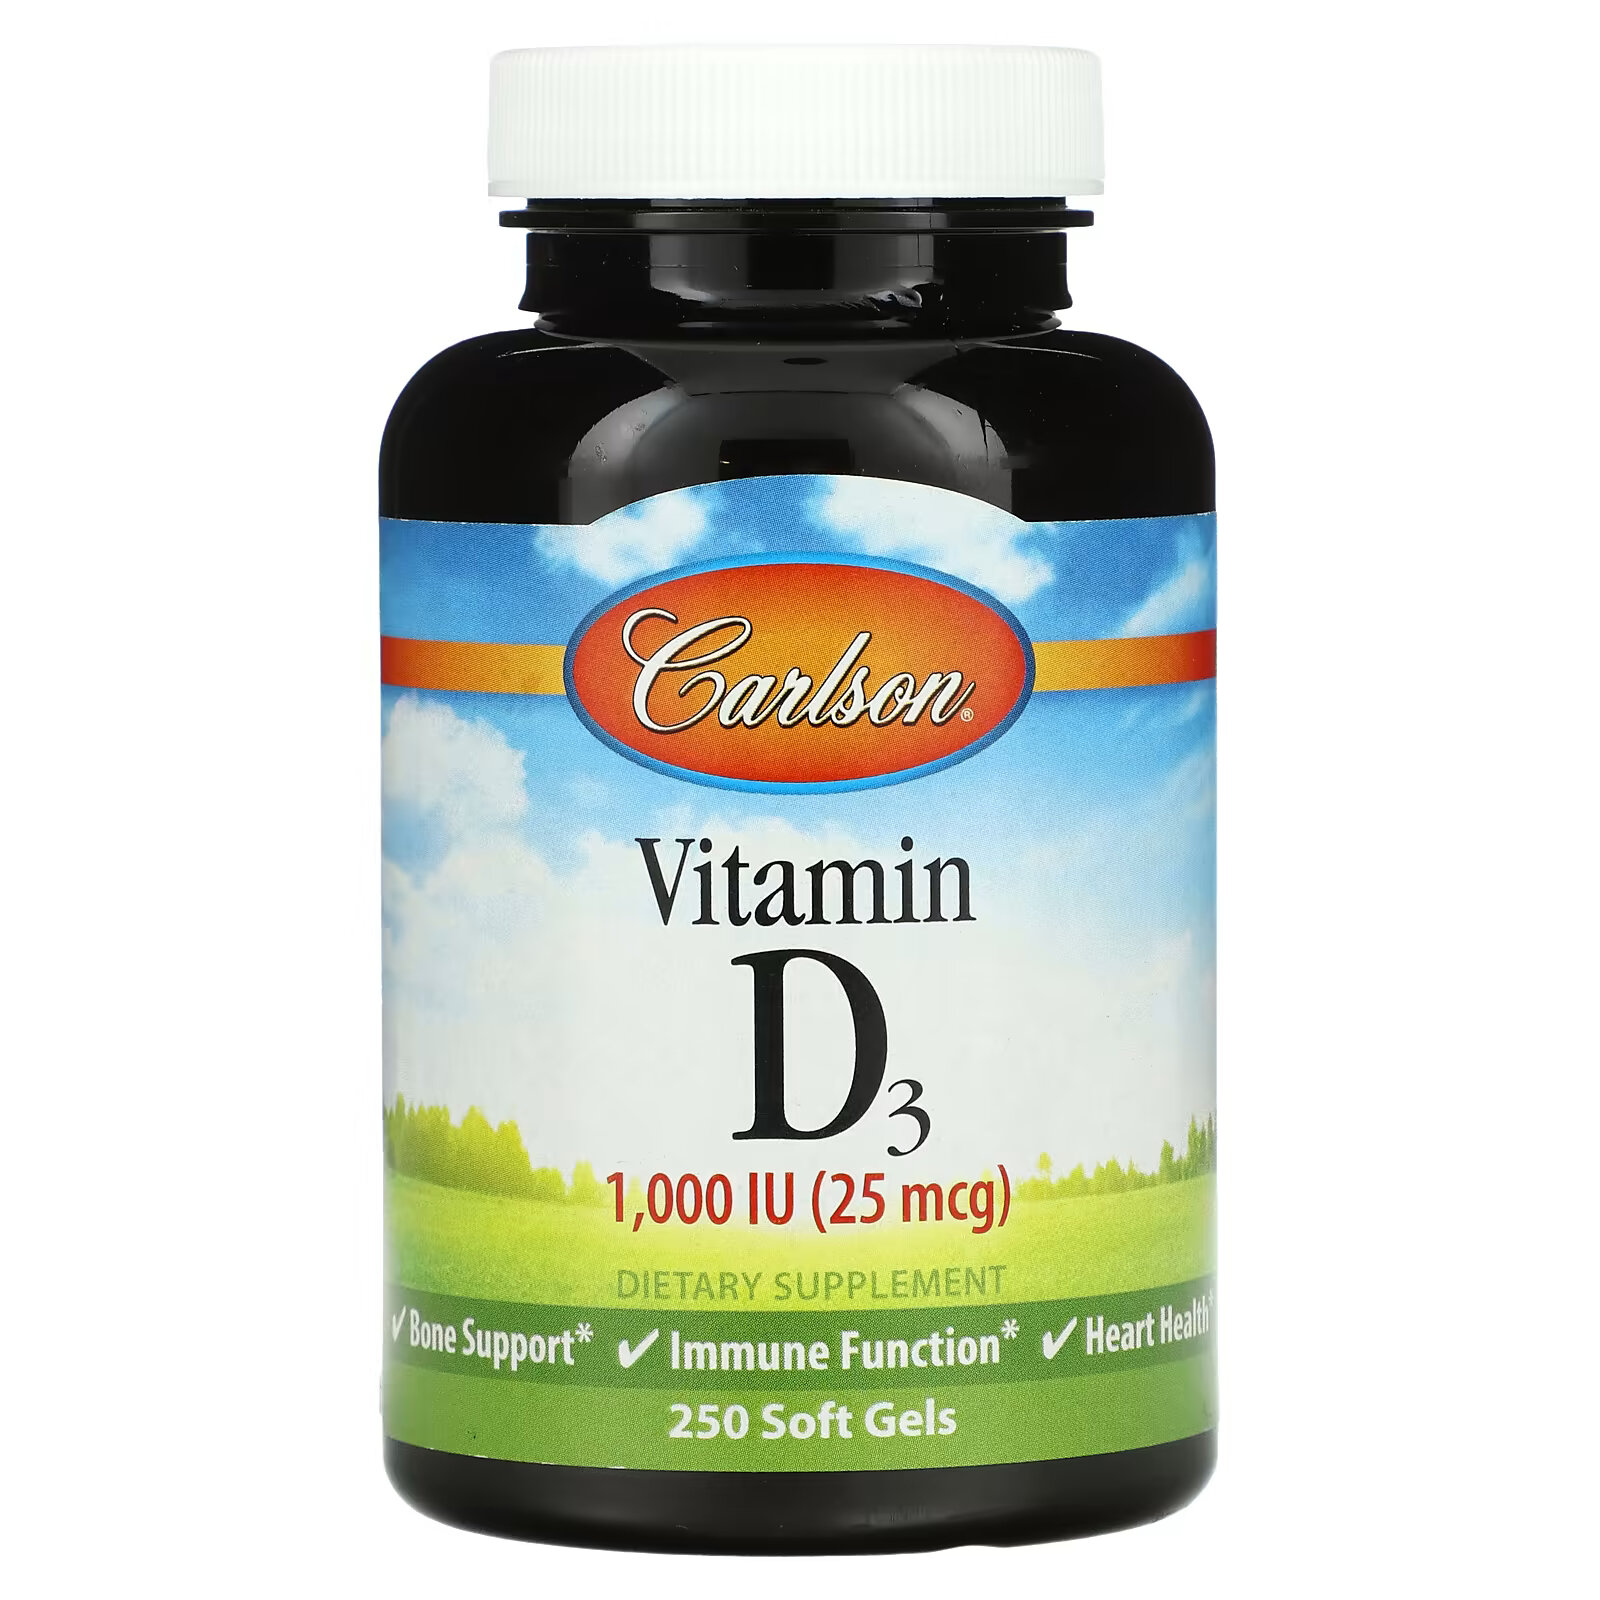 Carlson, Витамин D3, 1000 МЕ (25 мкг), 250 мягких таблеток витамин d3 21st century 25 мкг 1000 ме 250 мягких таблеток с быстрым высвобождением